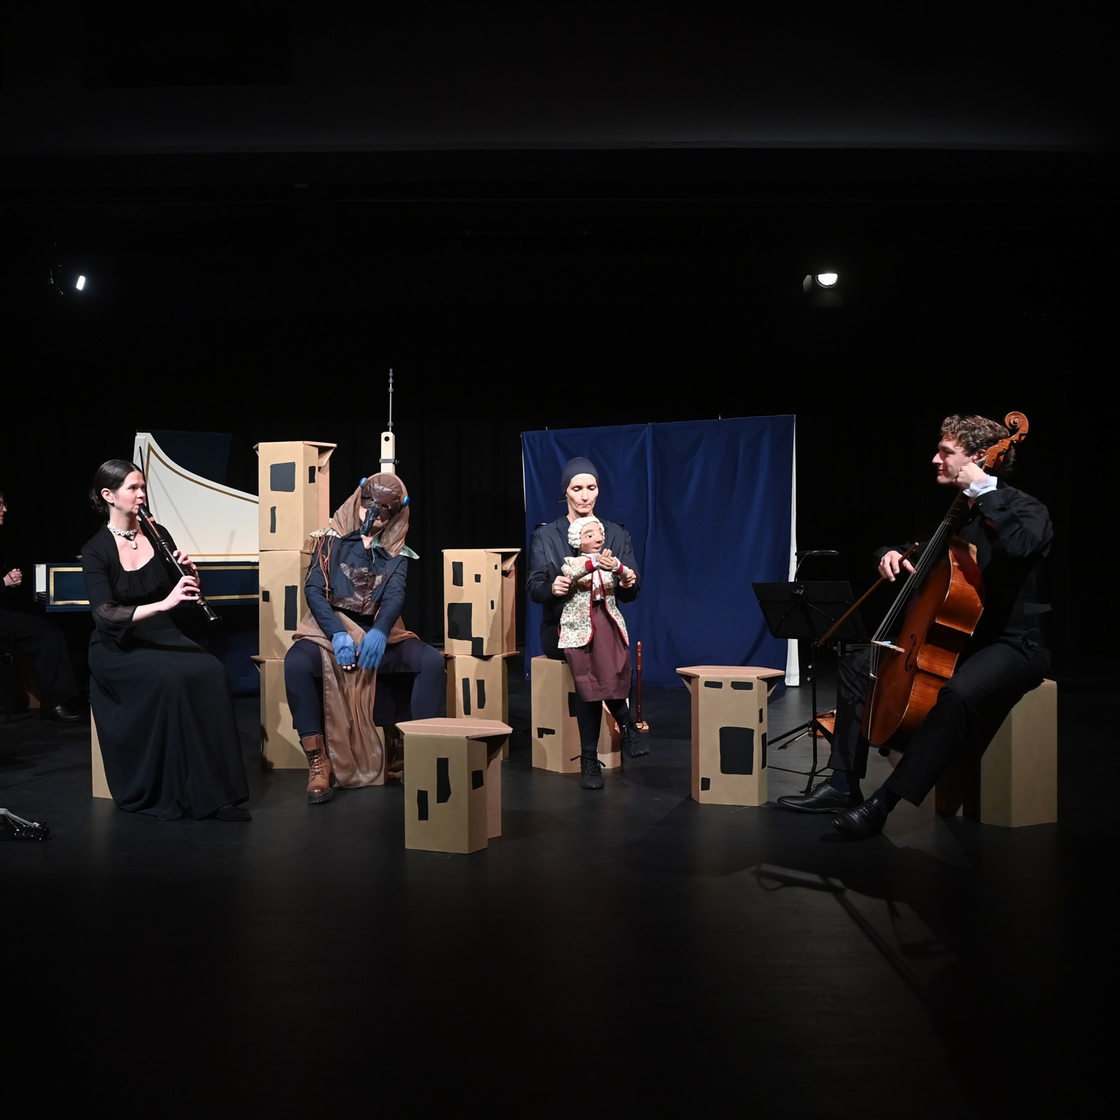 Szene aus dem Puppentheater "Der Tag, als die Zikade sang" mit dem Ensemble La Ninfea